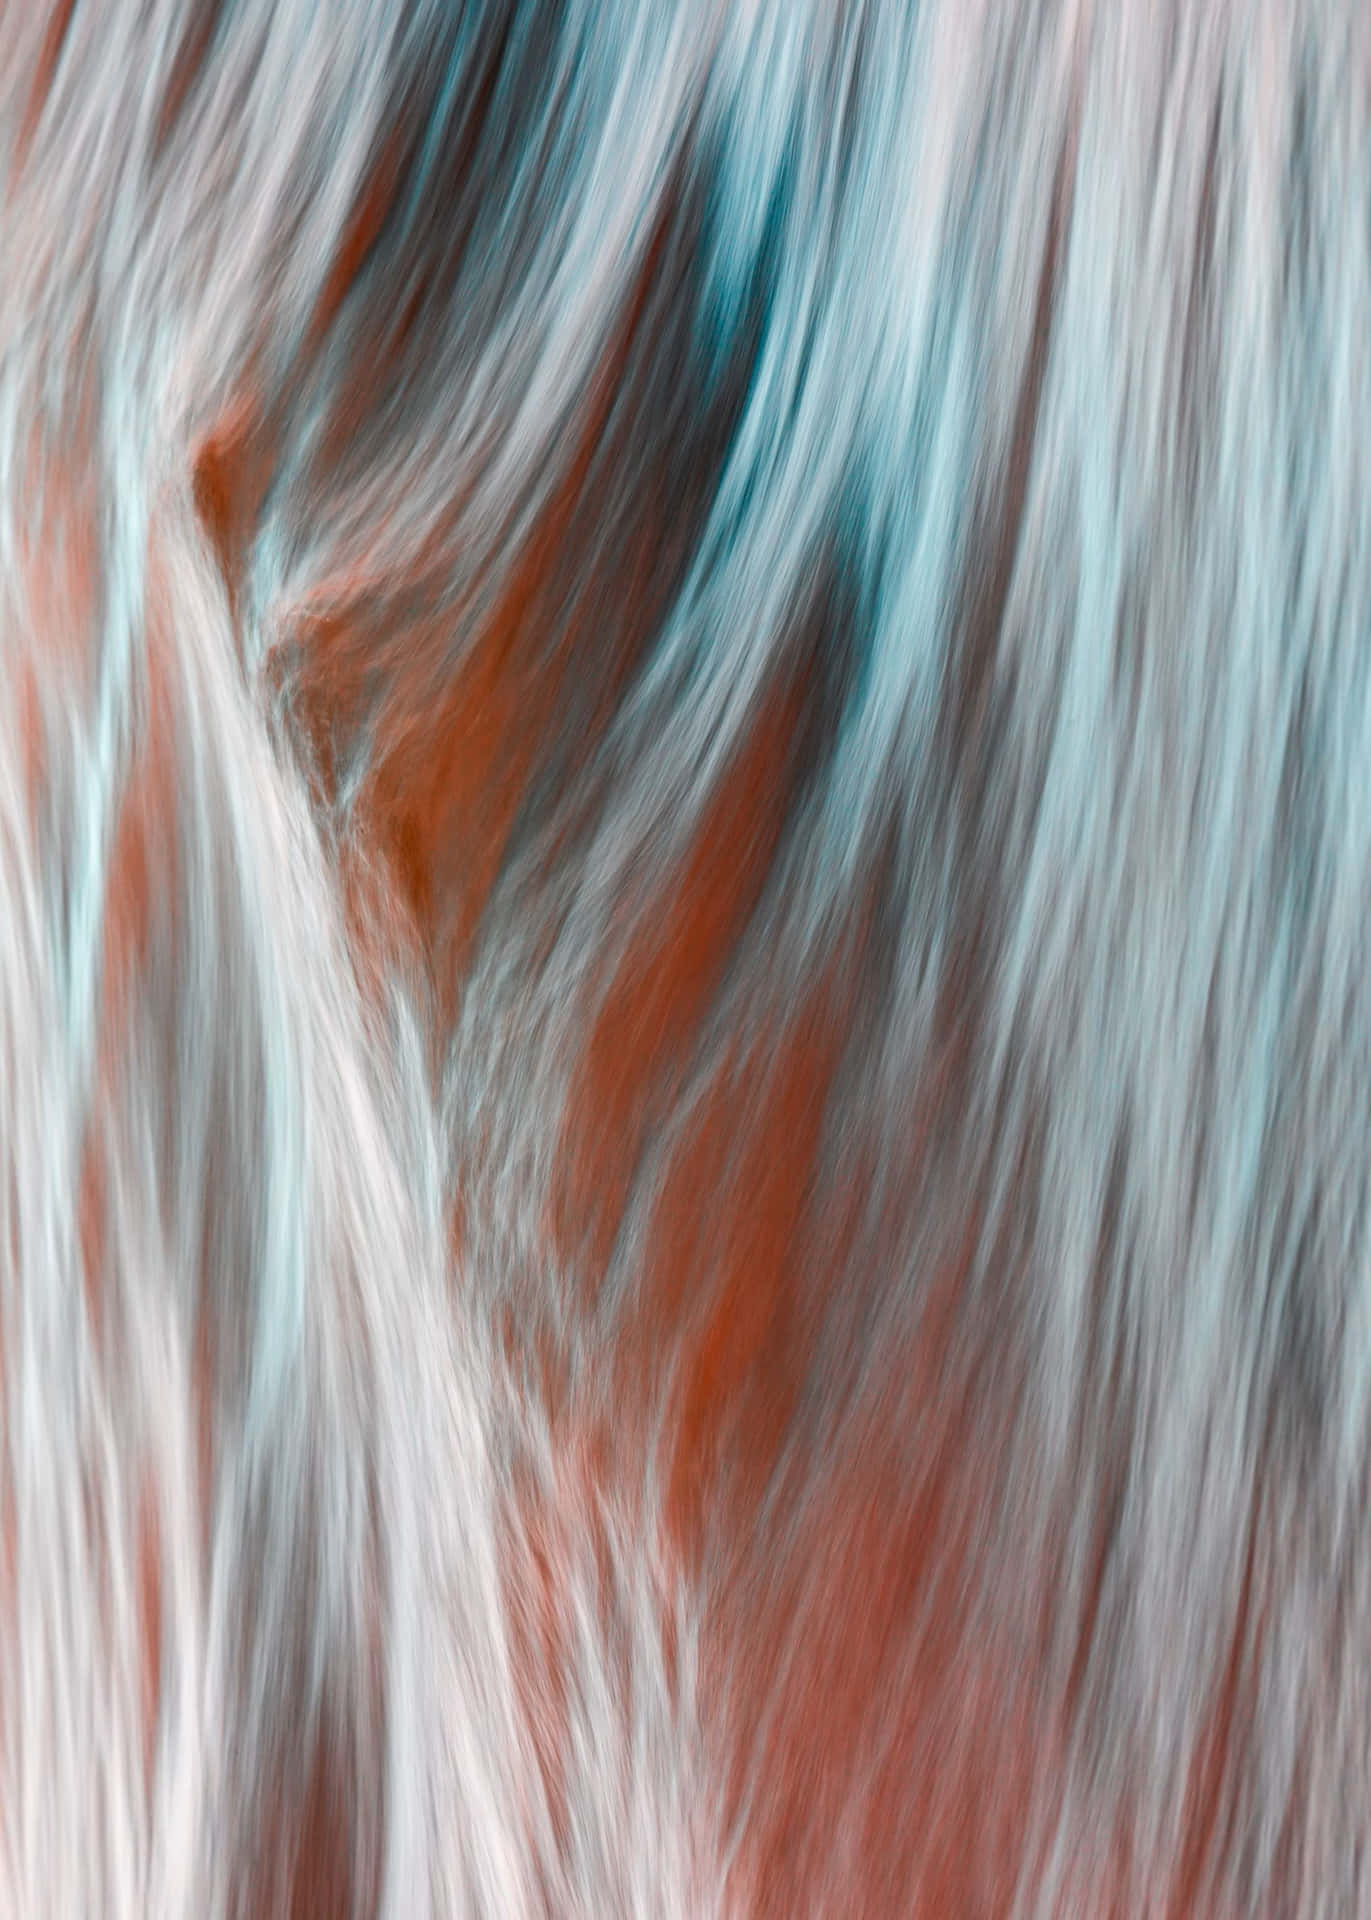 Abstract Textured Hair Waves Wallpaper